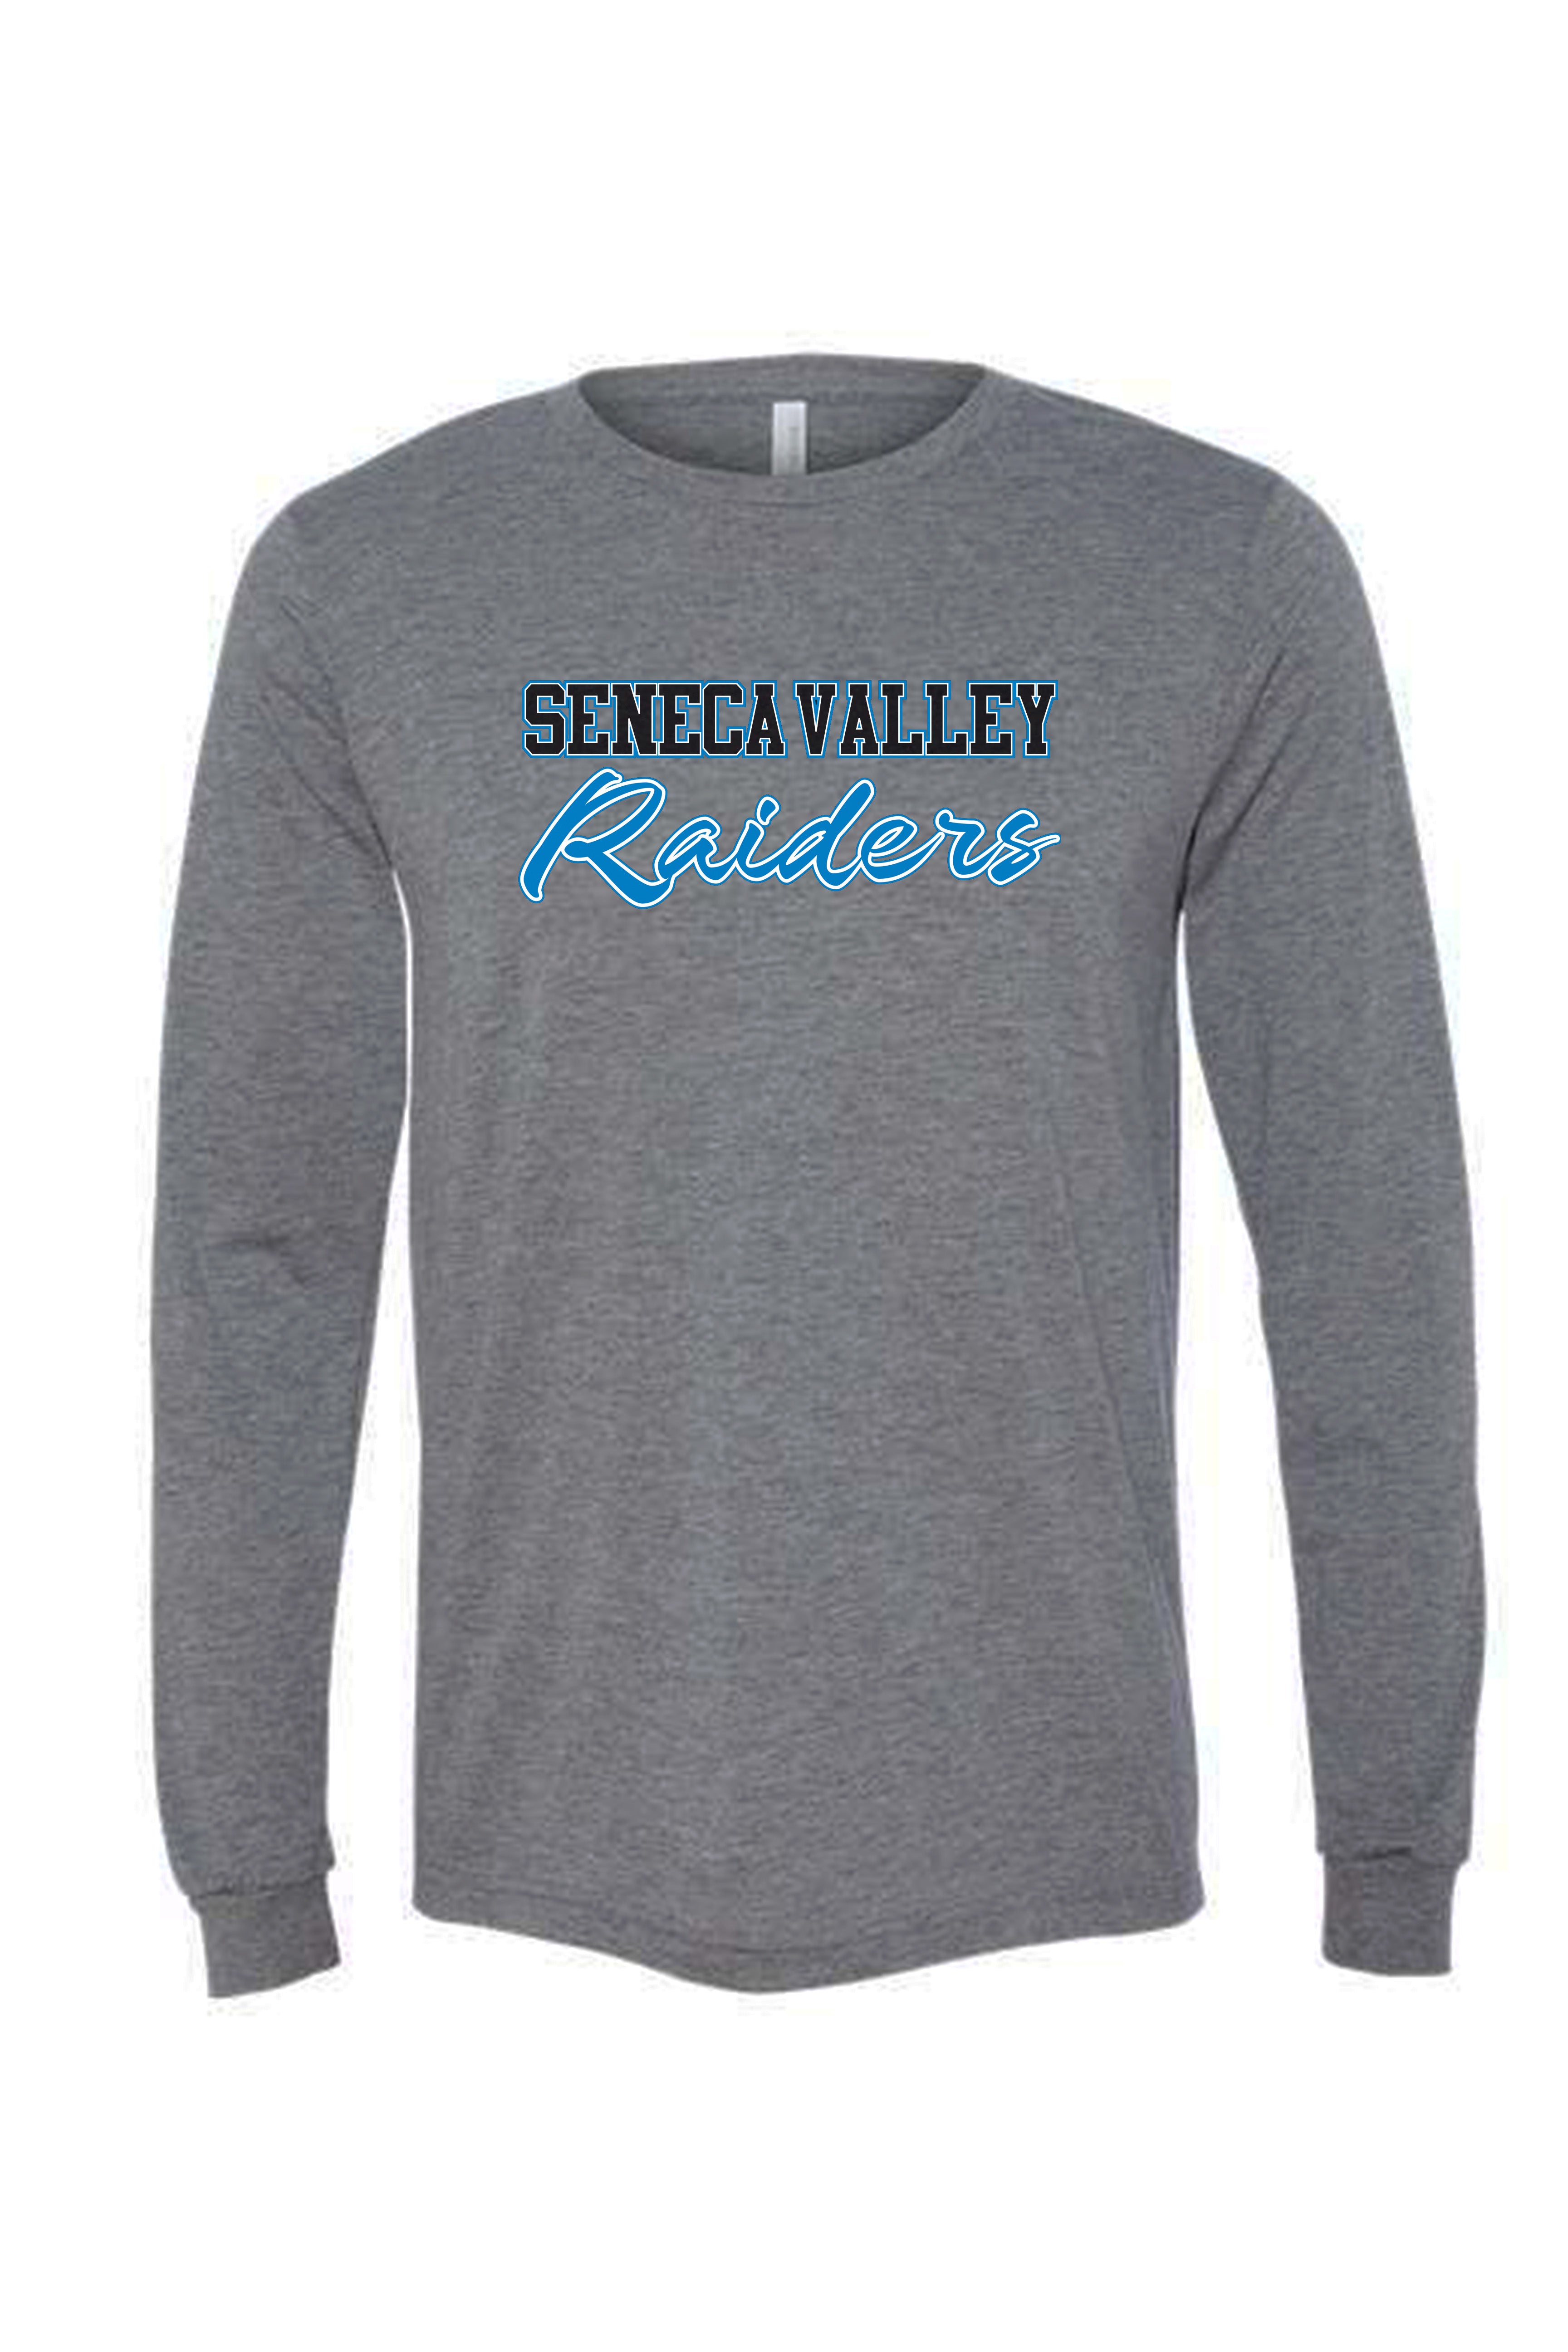 5215 - "Seneca Valley Raiders " Stacked Logo  Long Sleeve T-Shirt / Charcoal